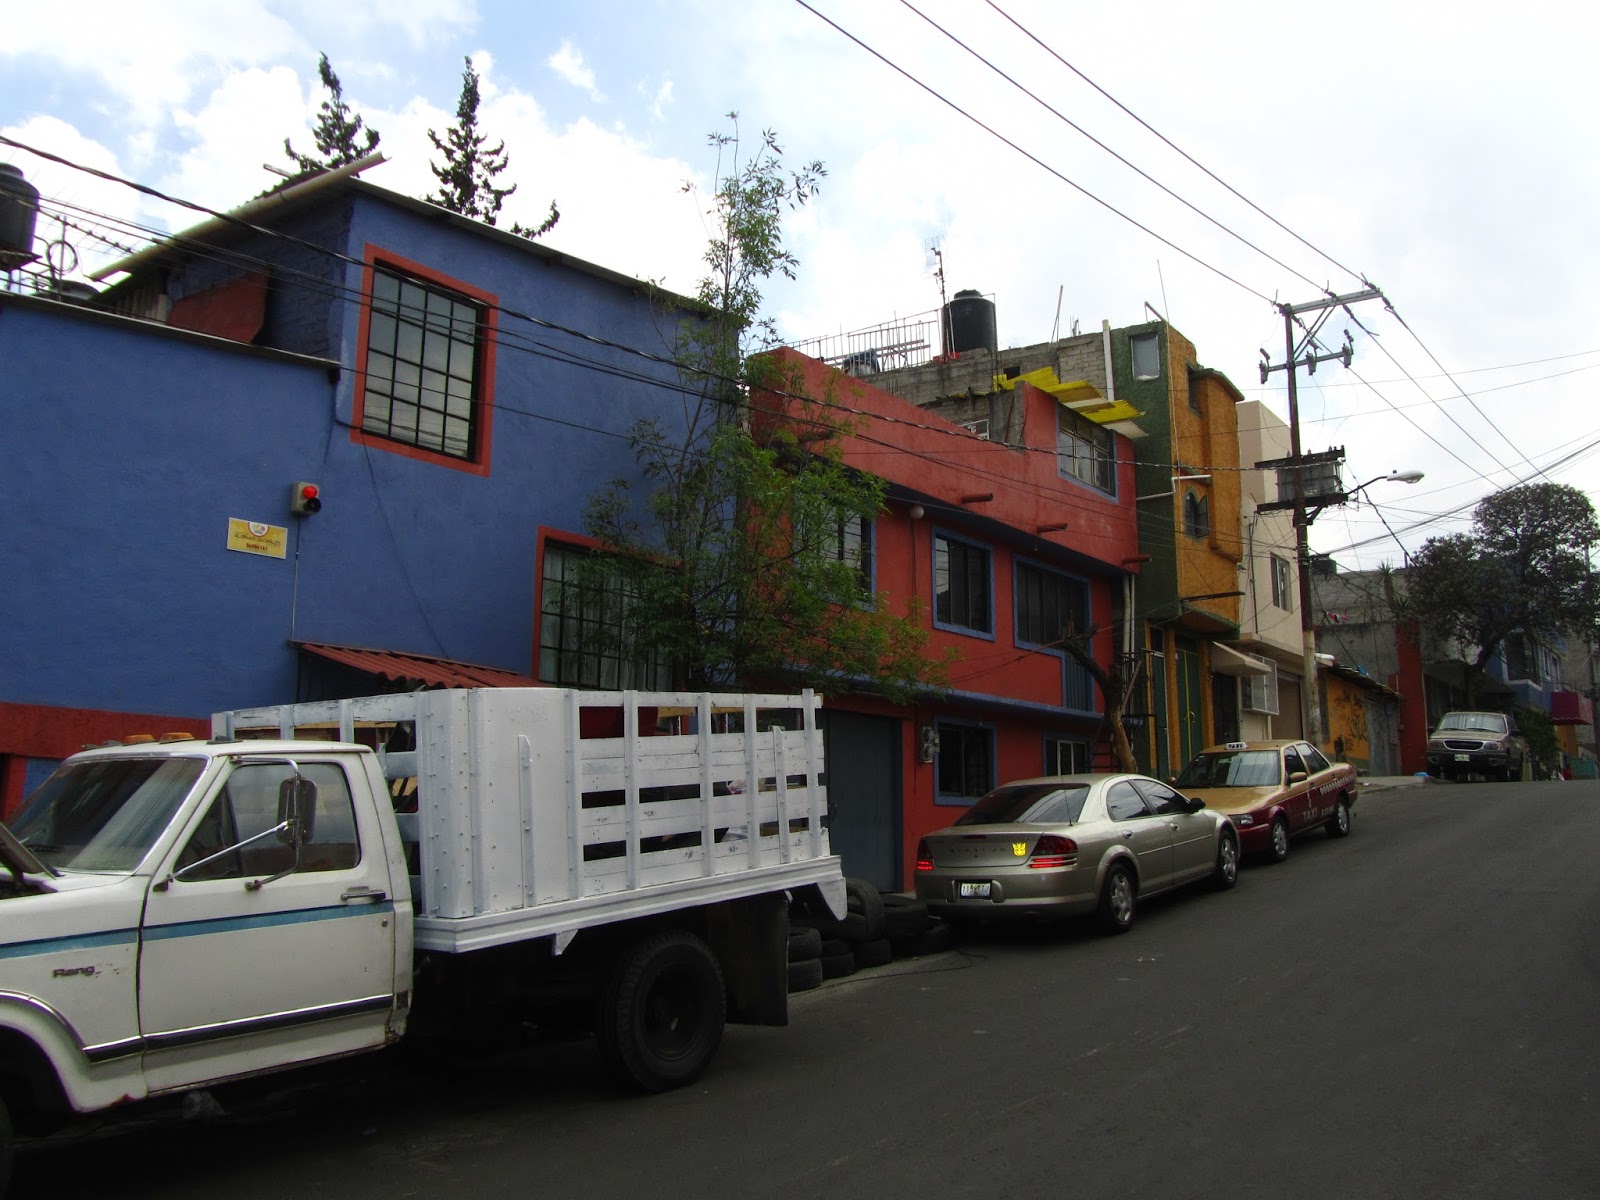 Neighborhood Improvement in Mexico City